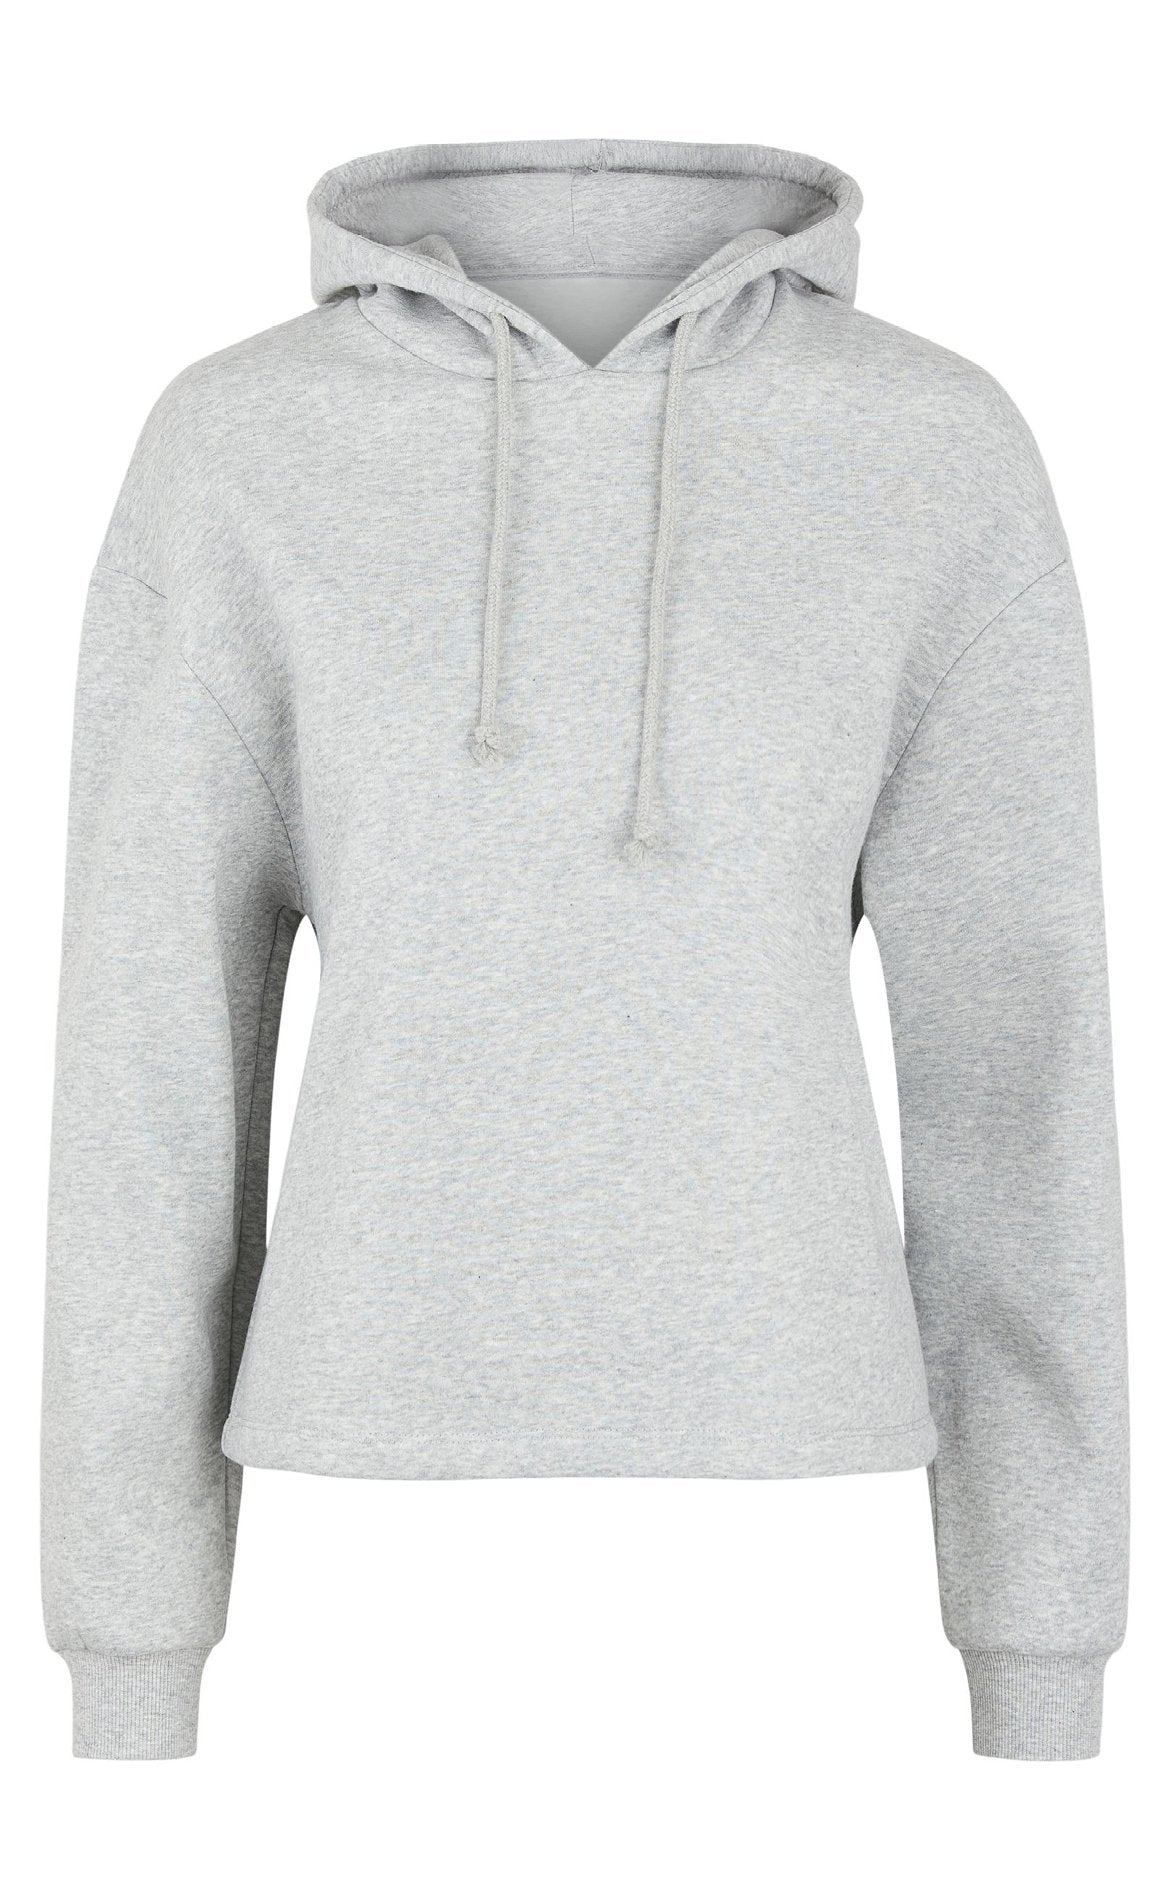 #3 - Pieces Sweater - Chilli - Light Grey Melange